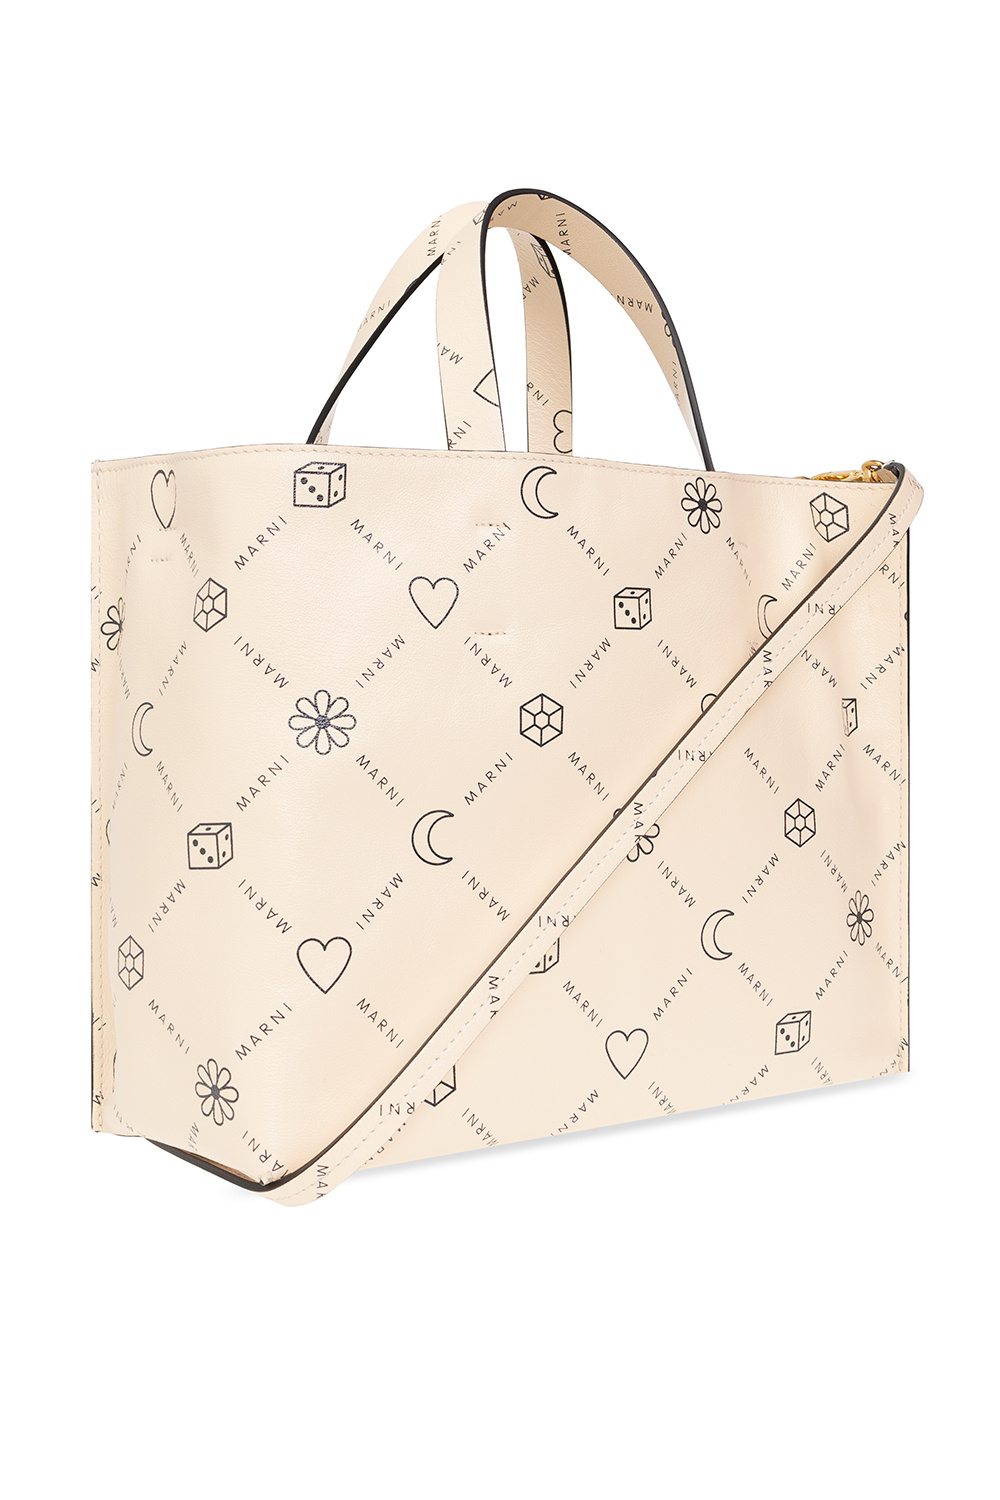 marni with Shopper bag